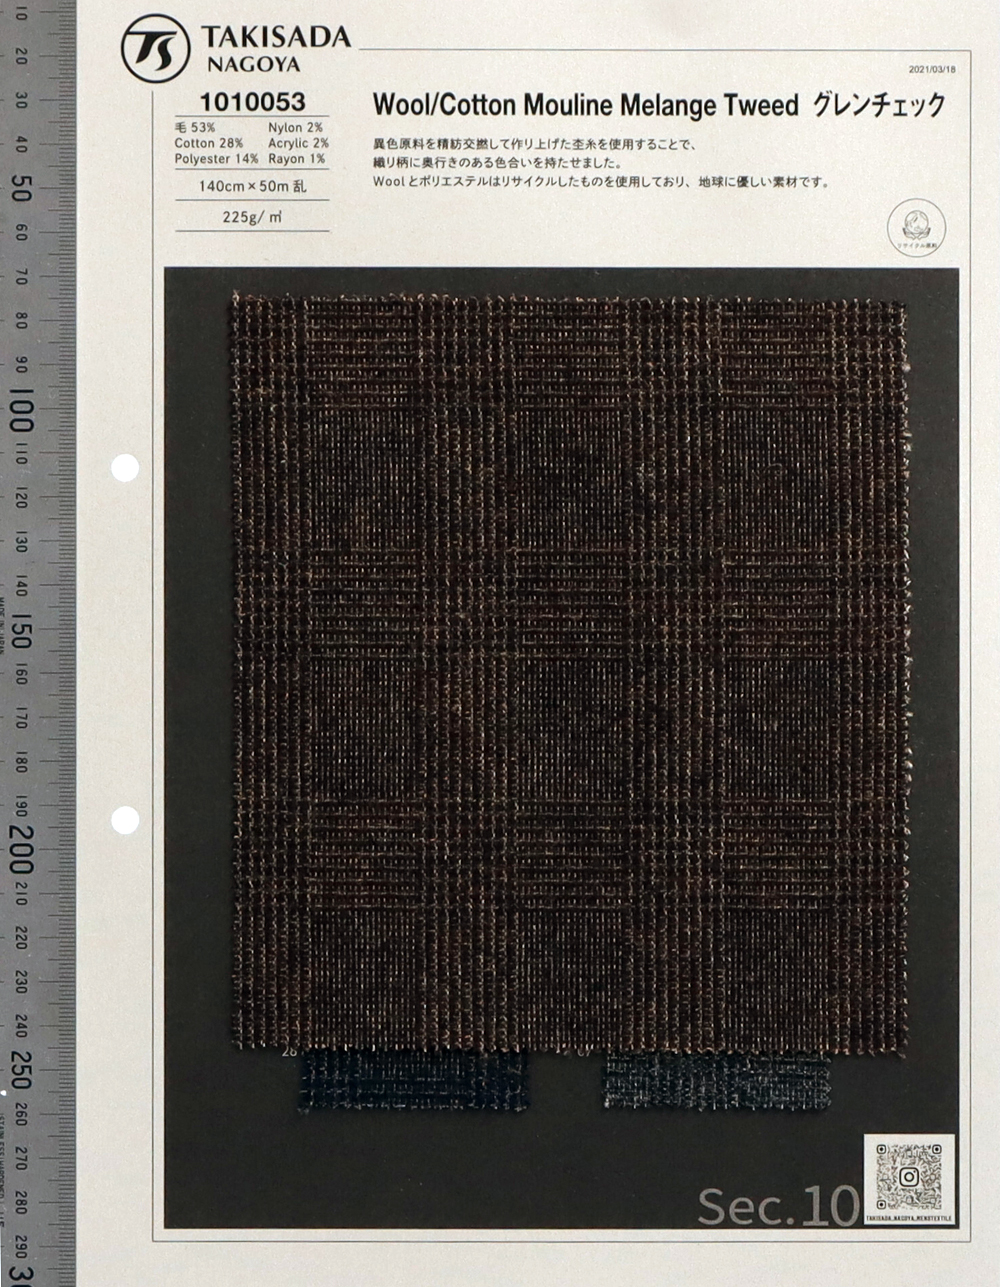 1010053 RE: NEWOOL® Laine / Coton Melange Tweed Prince De Galles[Fabrication De Textile] Takisada Nagoya